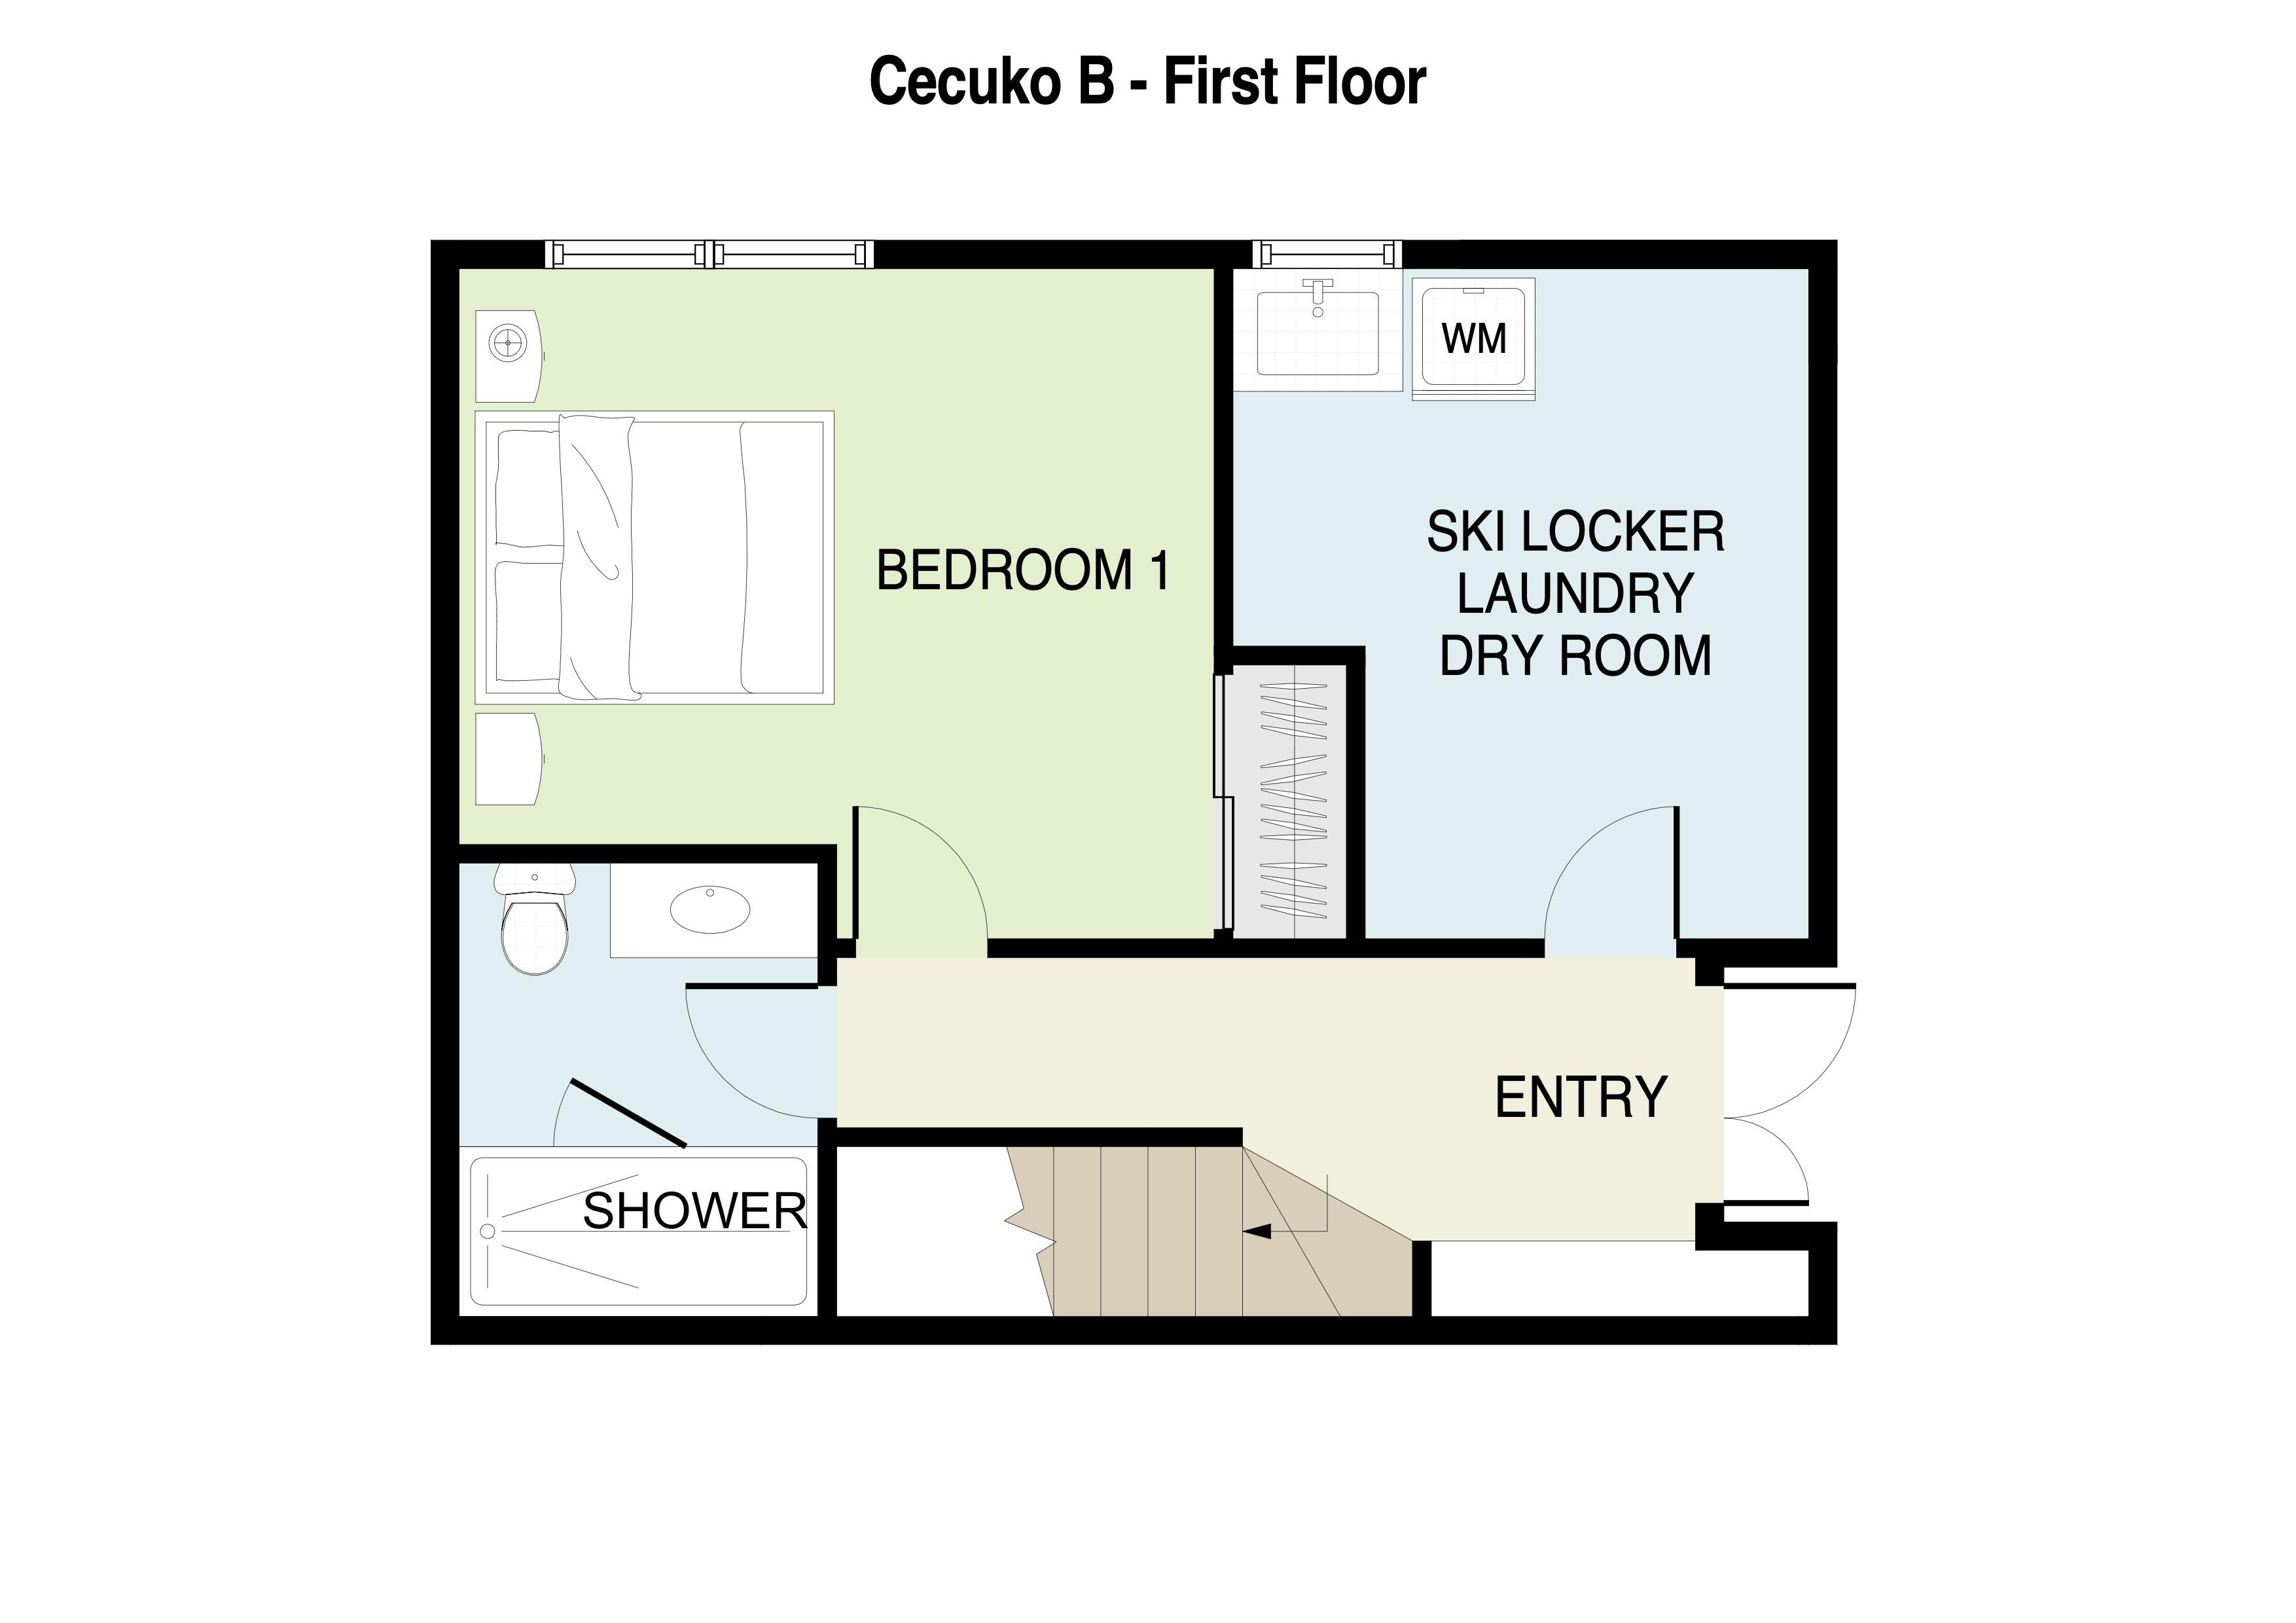 Cecuko B 1st Floor Plans